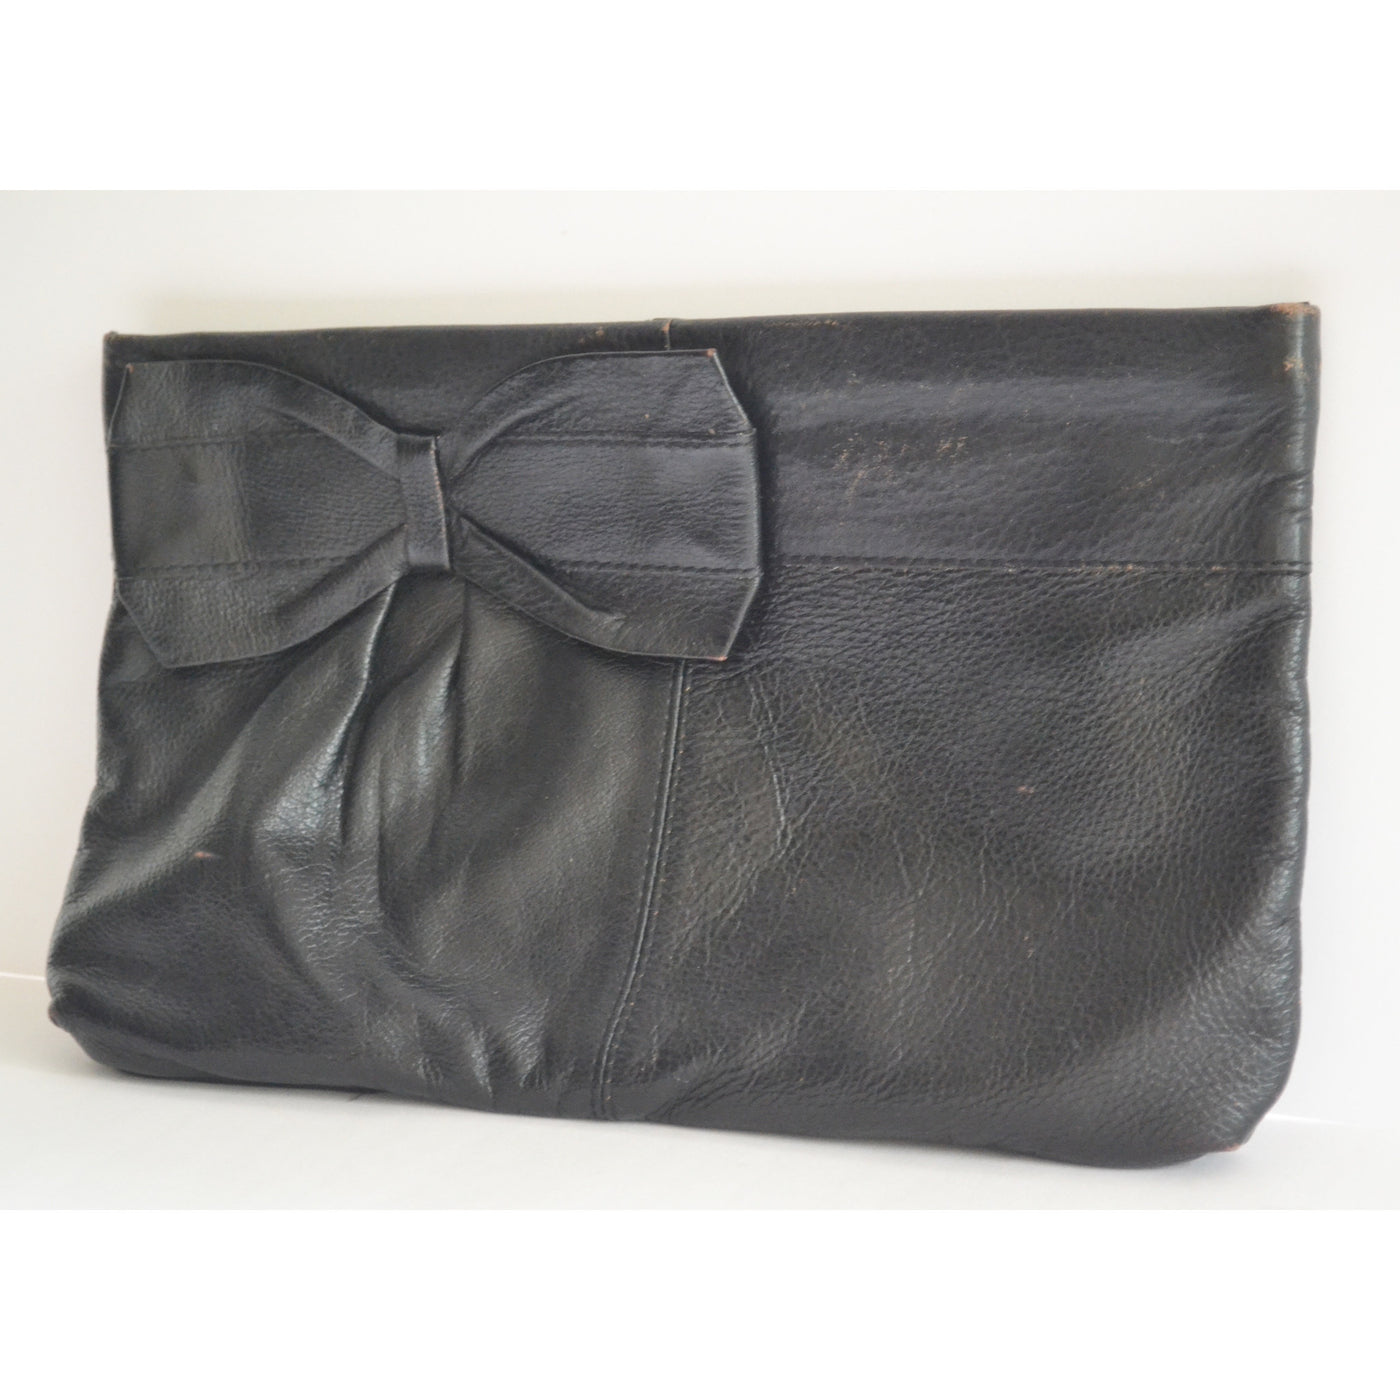 Vintage Black Leather Bow Clutch Purse